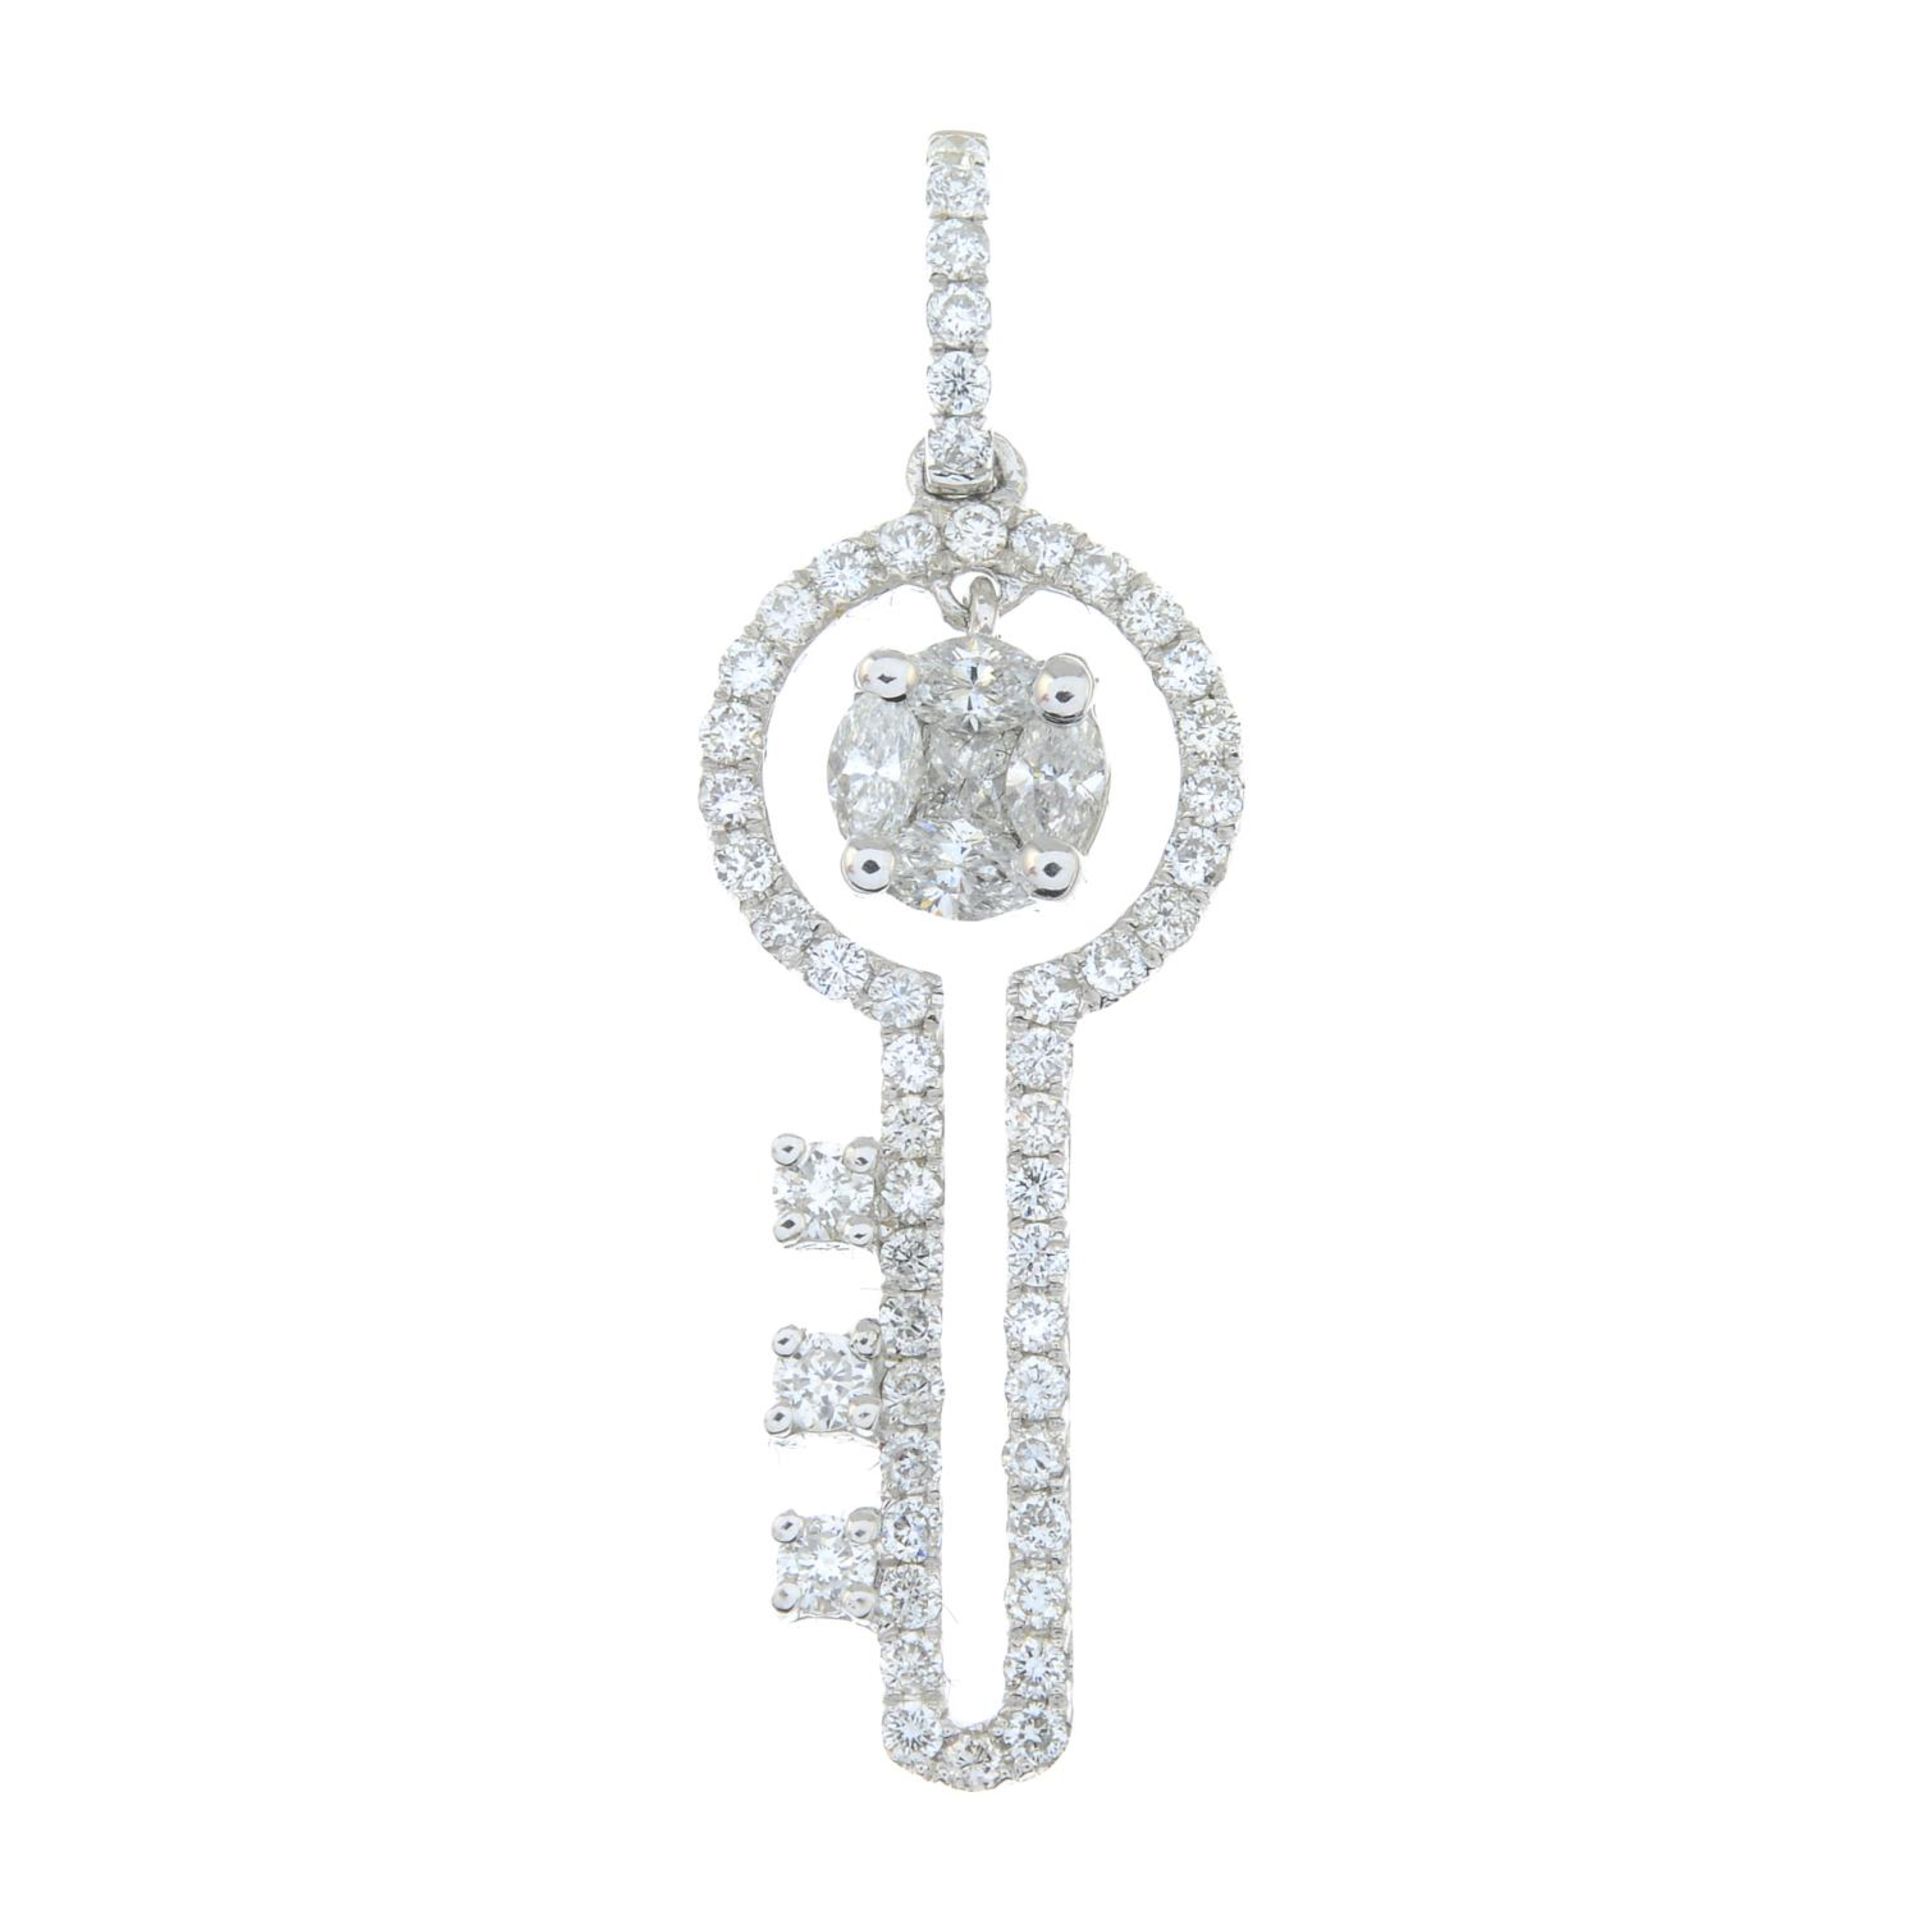 A diamond key pendant.Estimated total diamond weight 0.45ct.